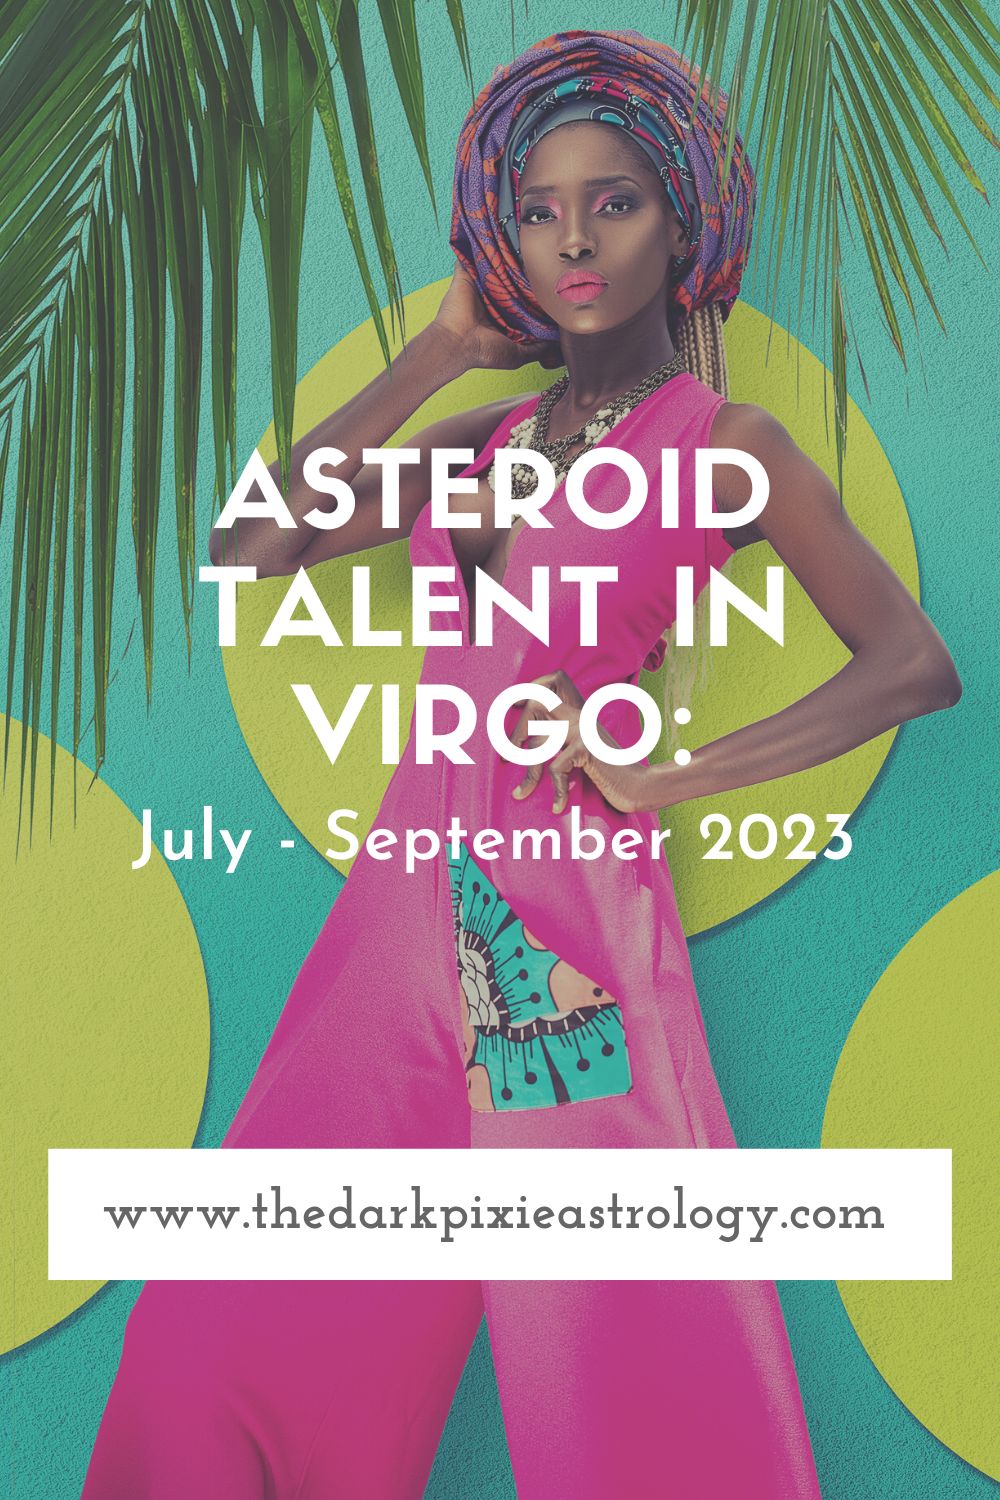 Asteroid Talent in Virgo: July - September 2023 - The Dark Pixie Astrology